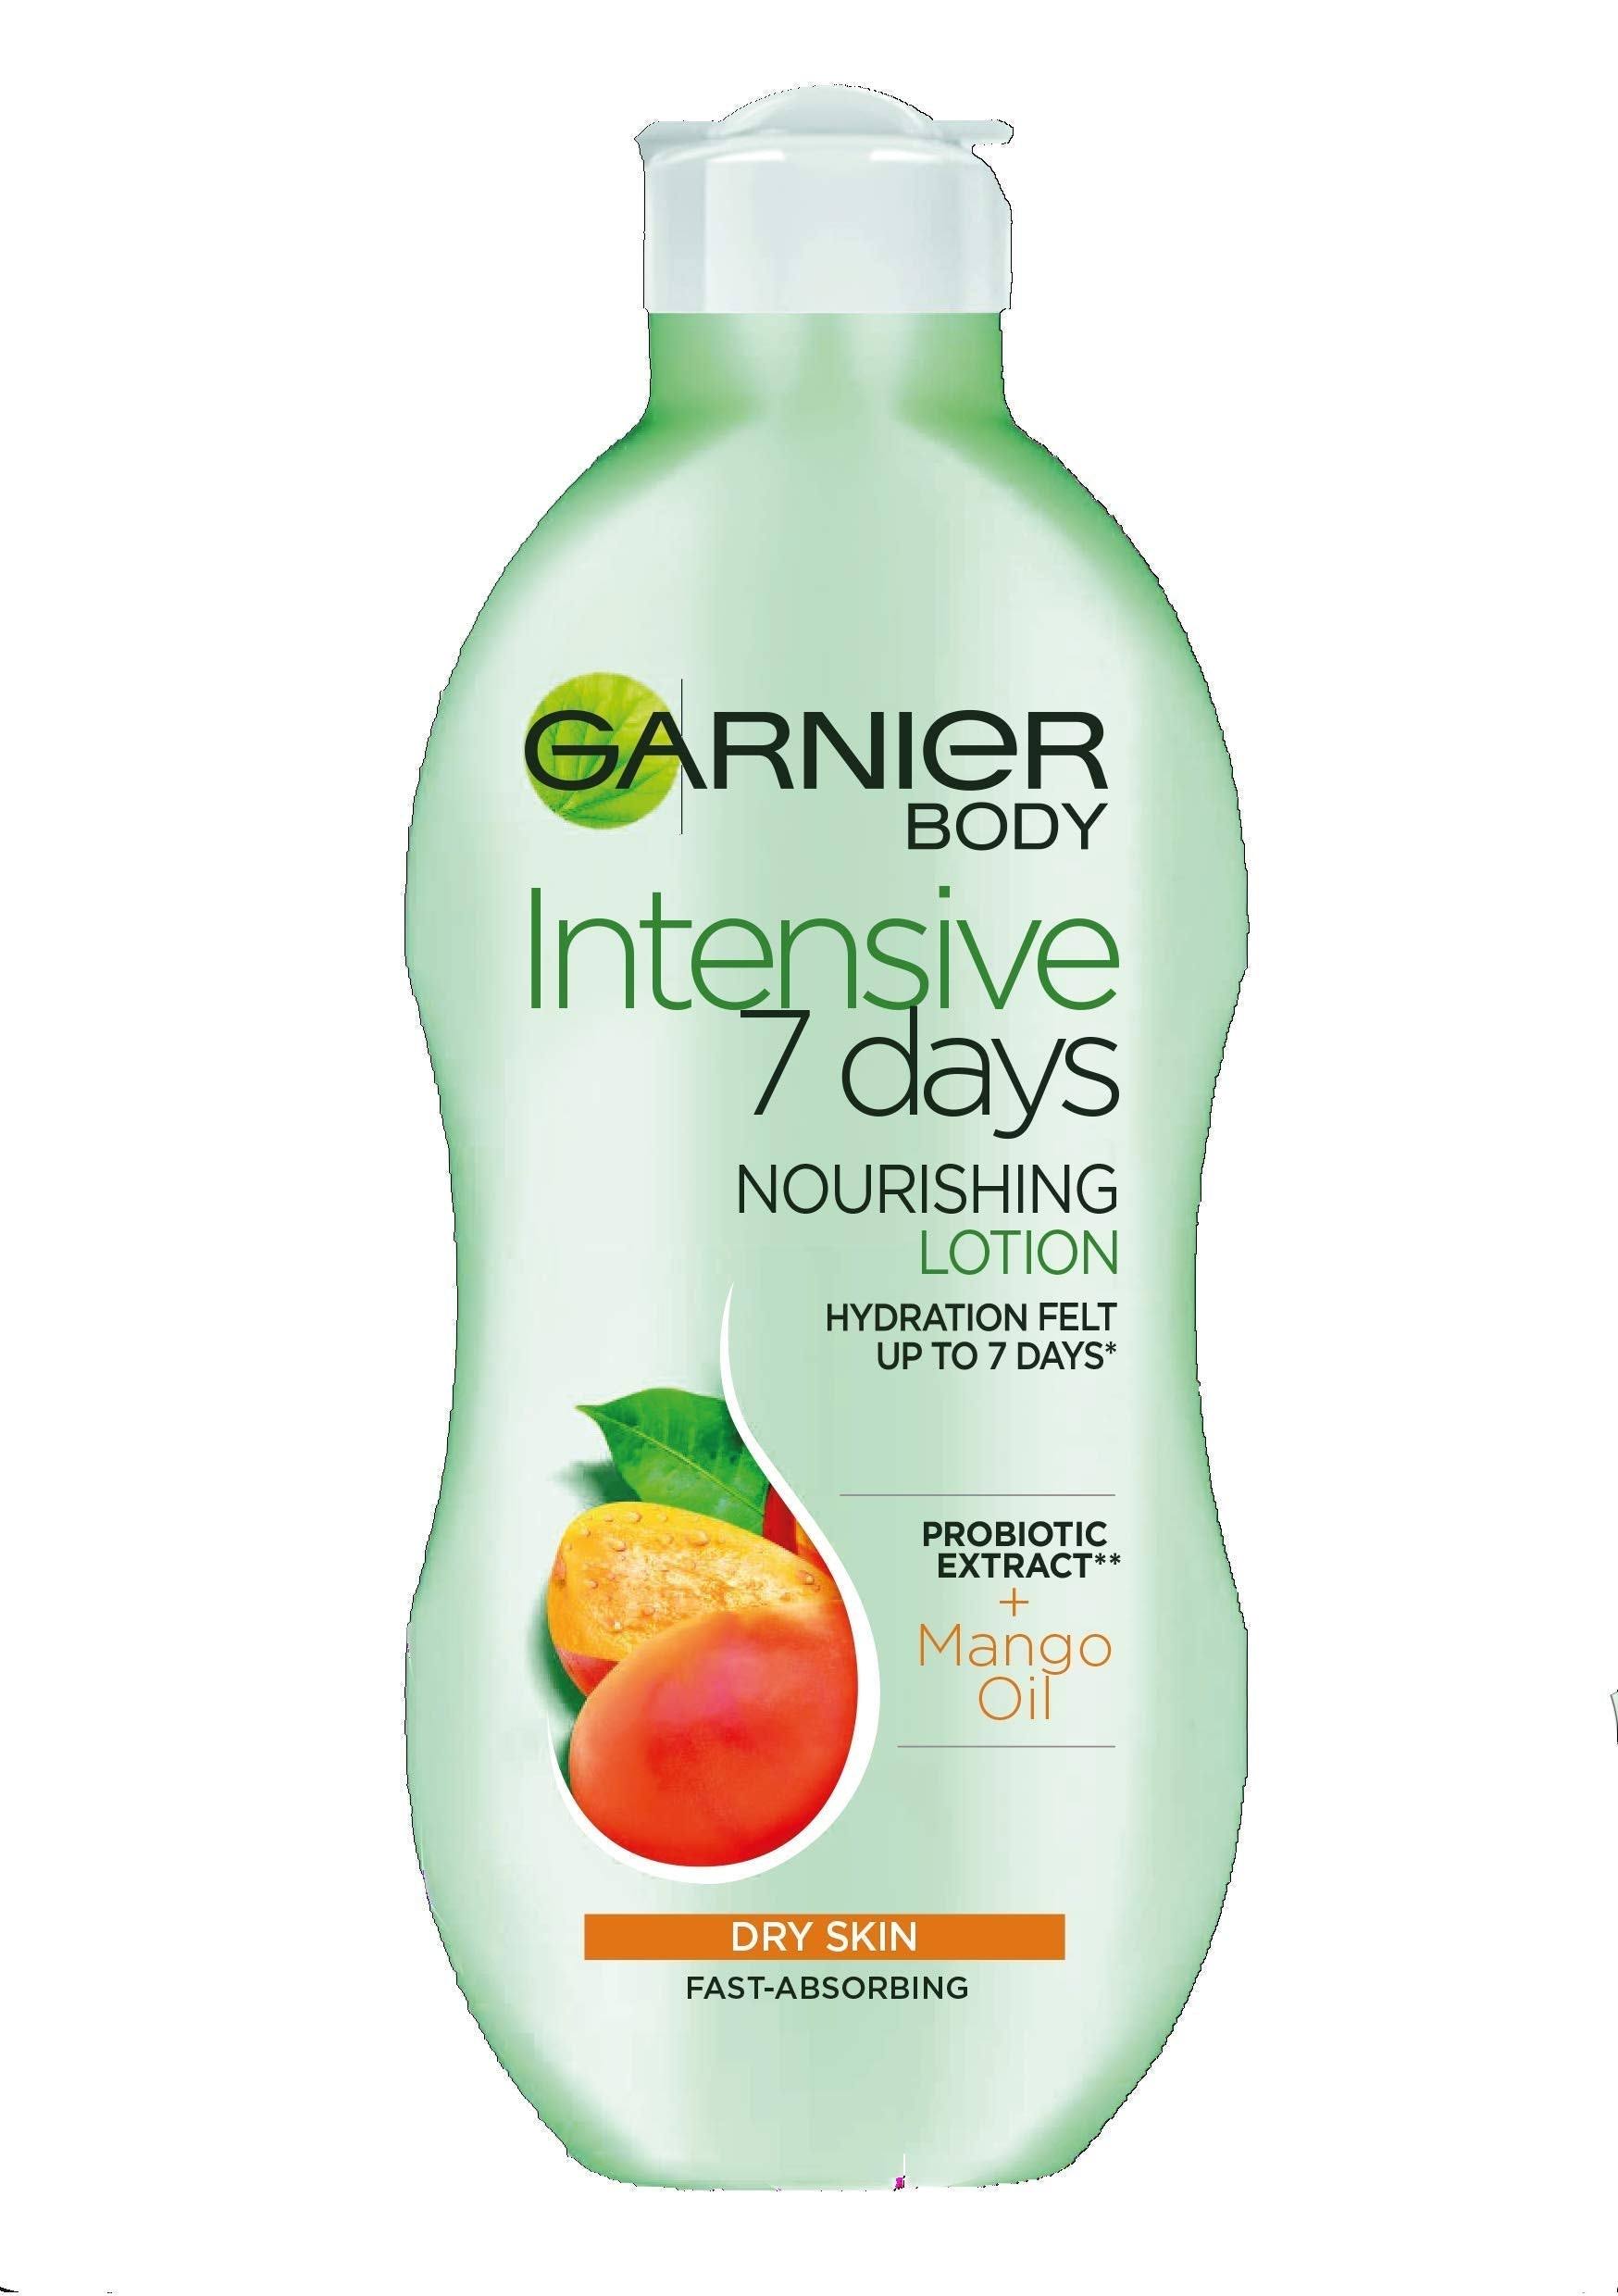 Garnier Intensive Dry Skin 7 Days Mango Probiotic Extract Body Lotion - 250ml